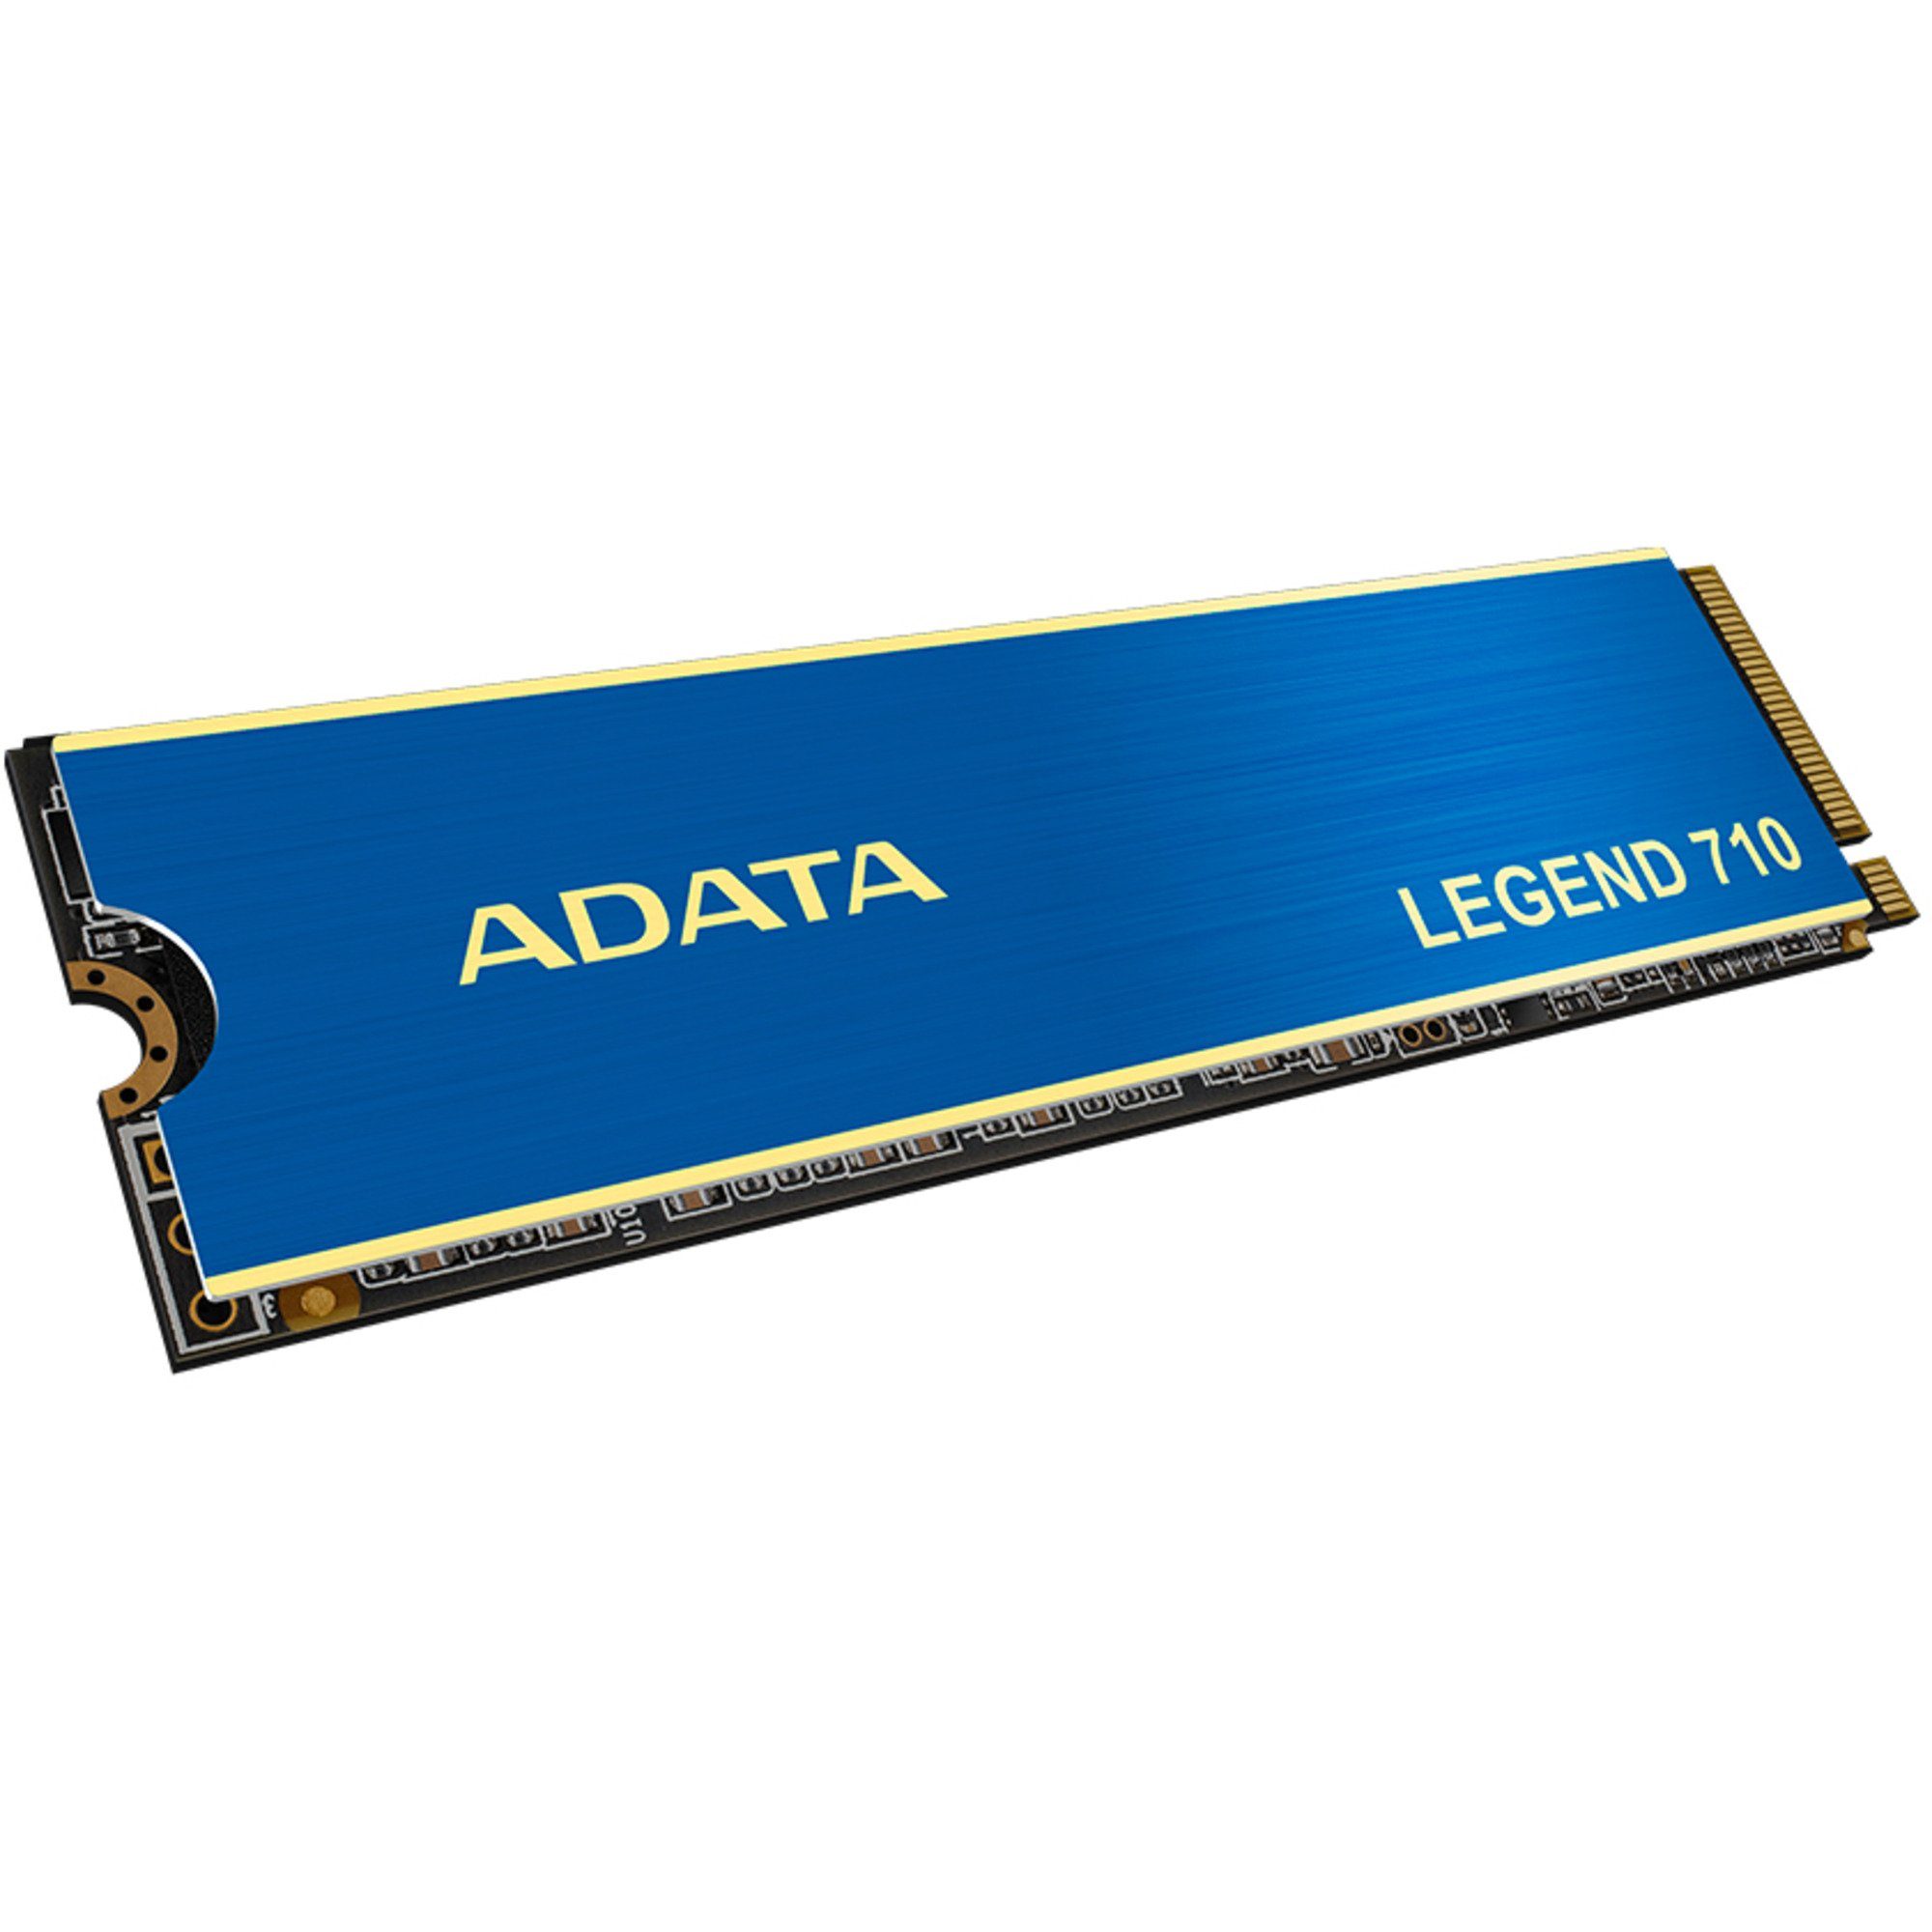 ADATA LEGEND 710 2 TB SSD-Festplatte (2 TB) Steckkarte"